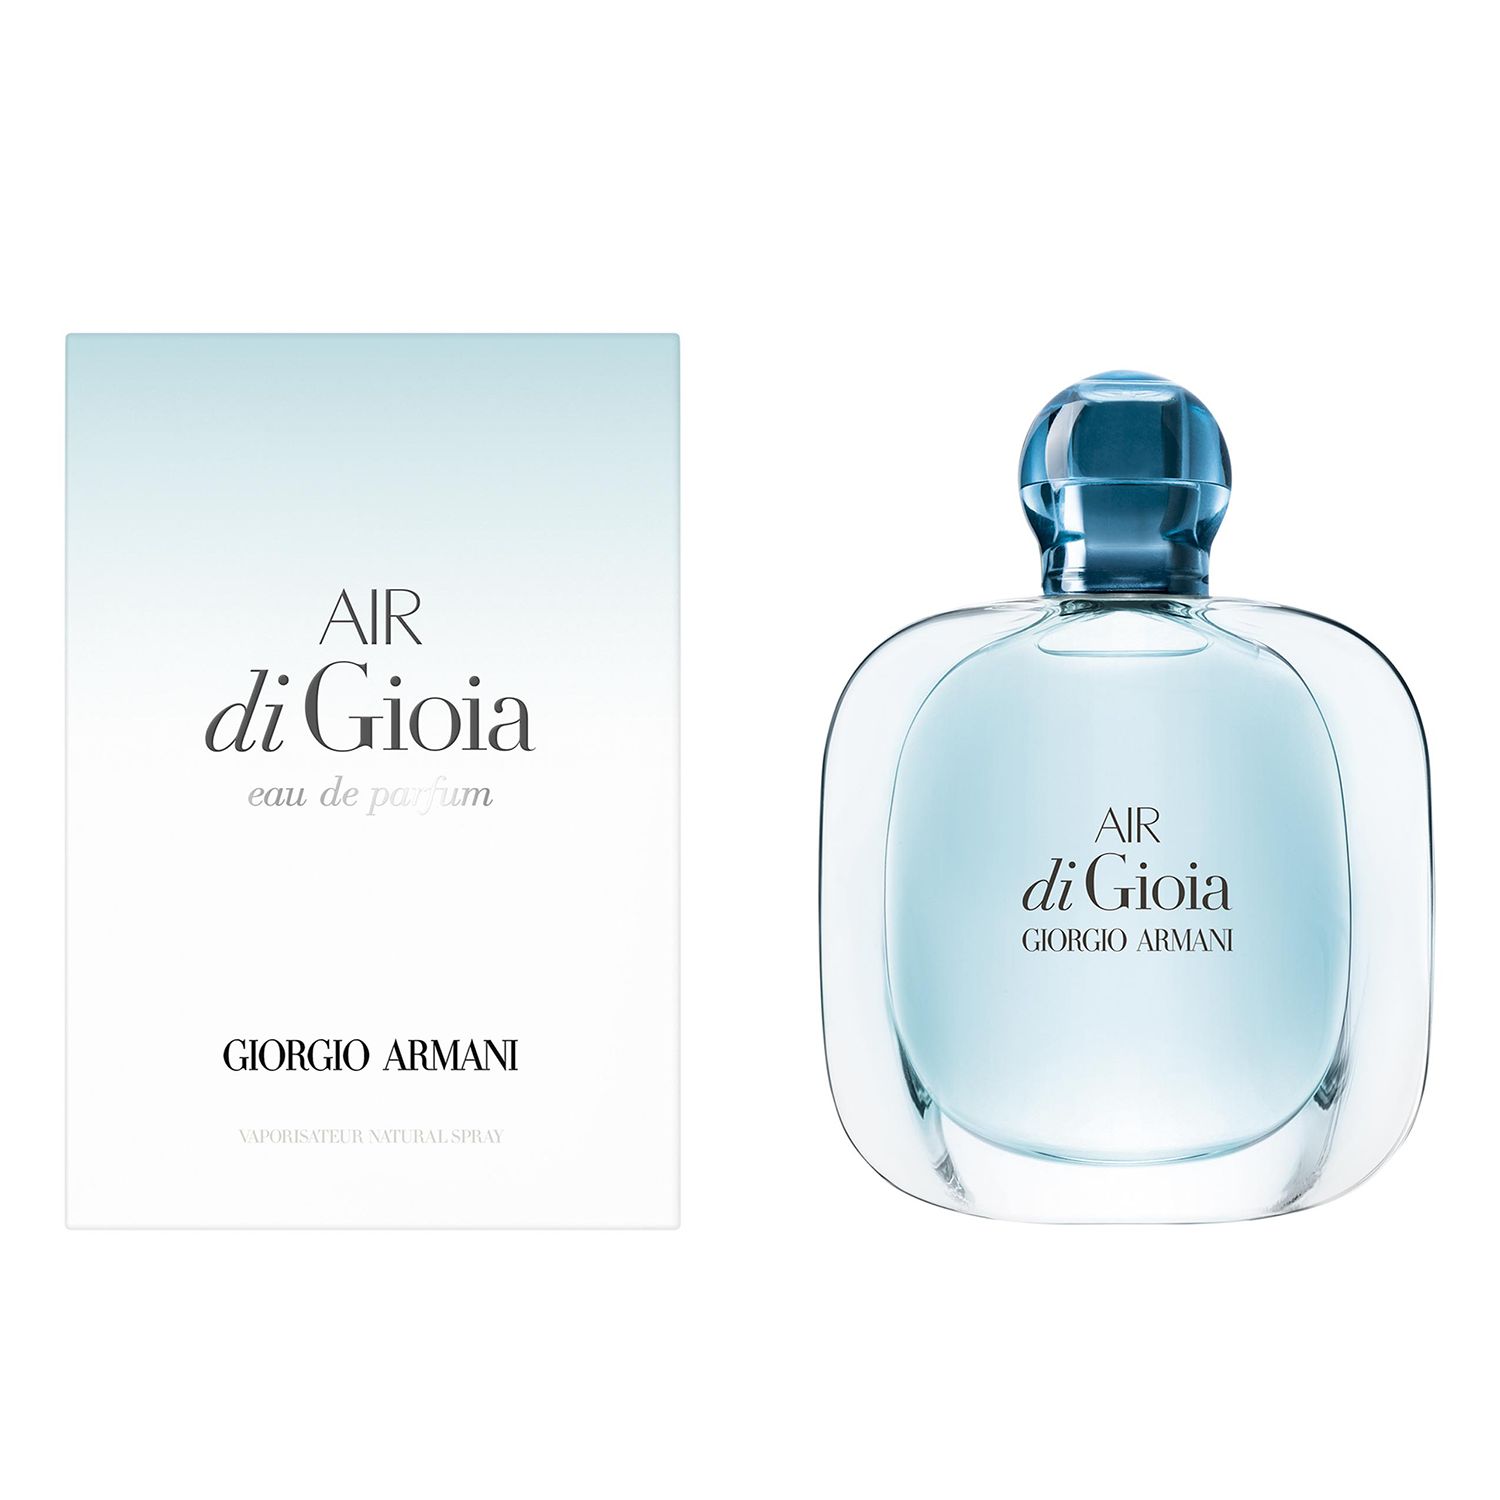 georgio armani womens perfume